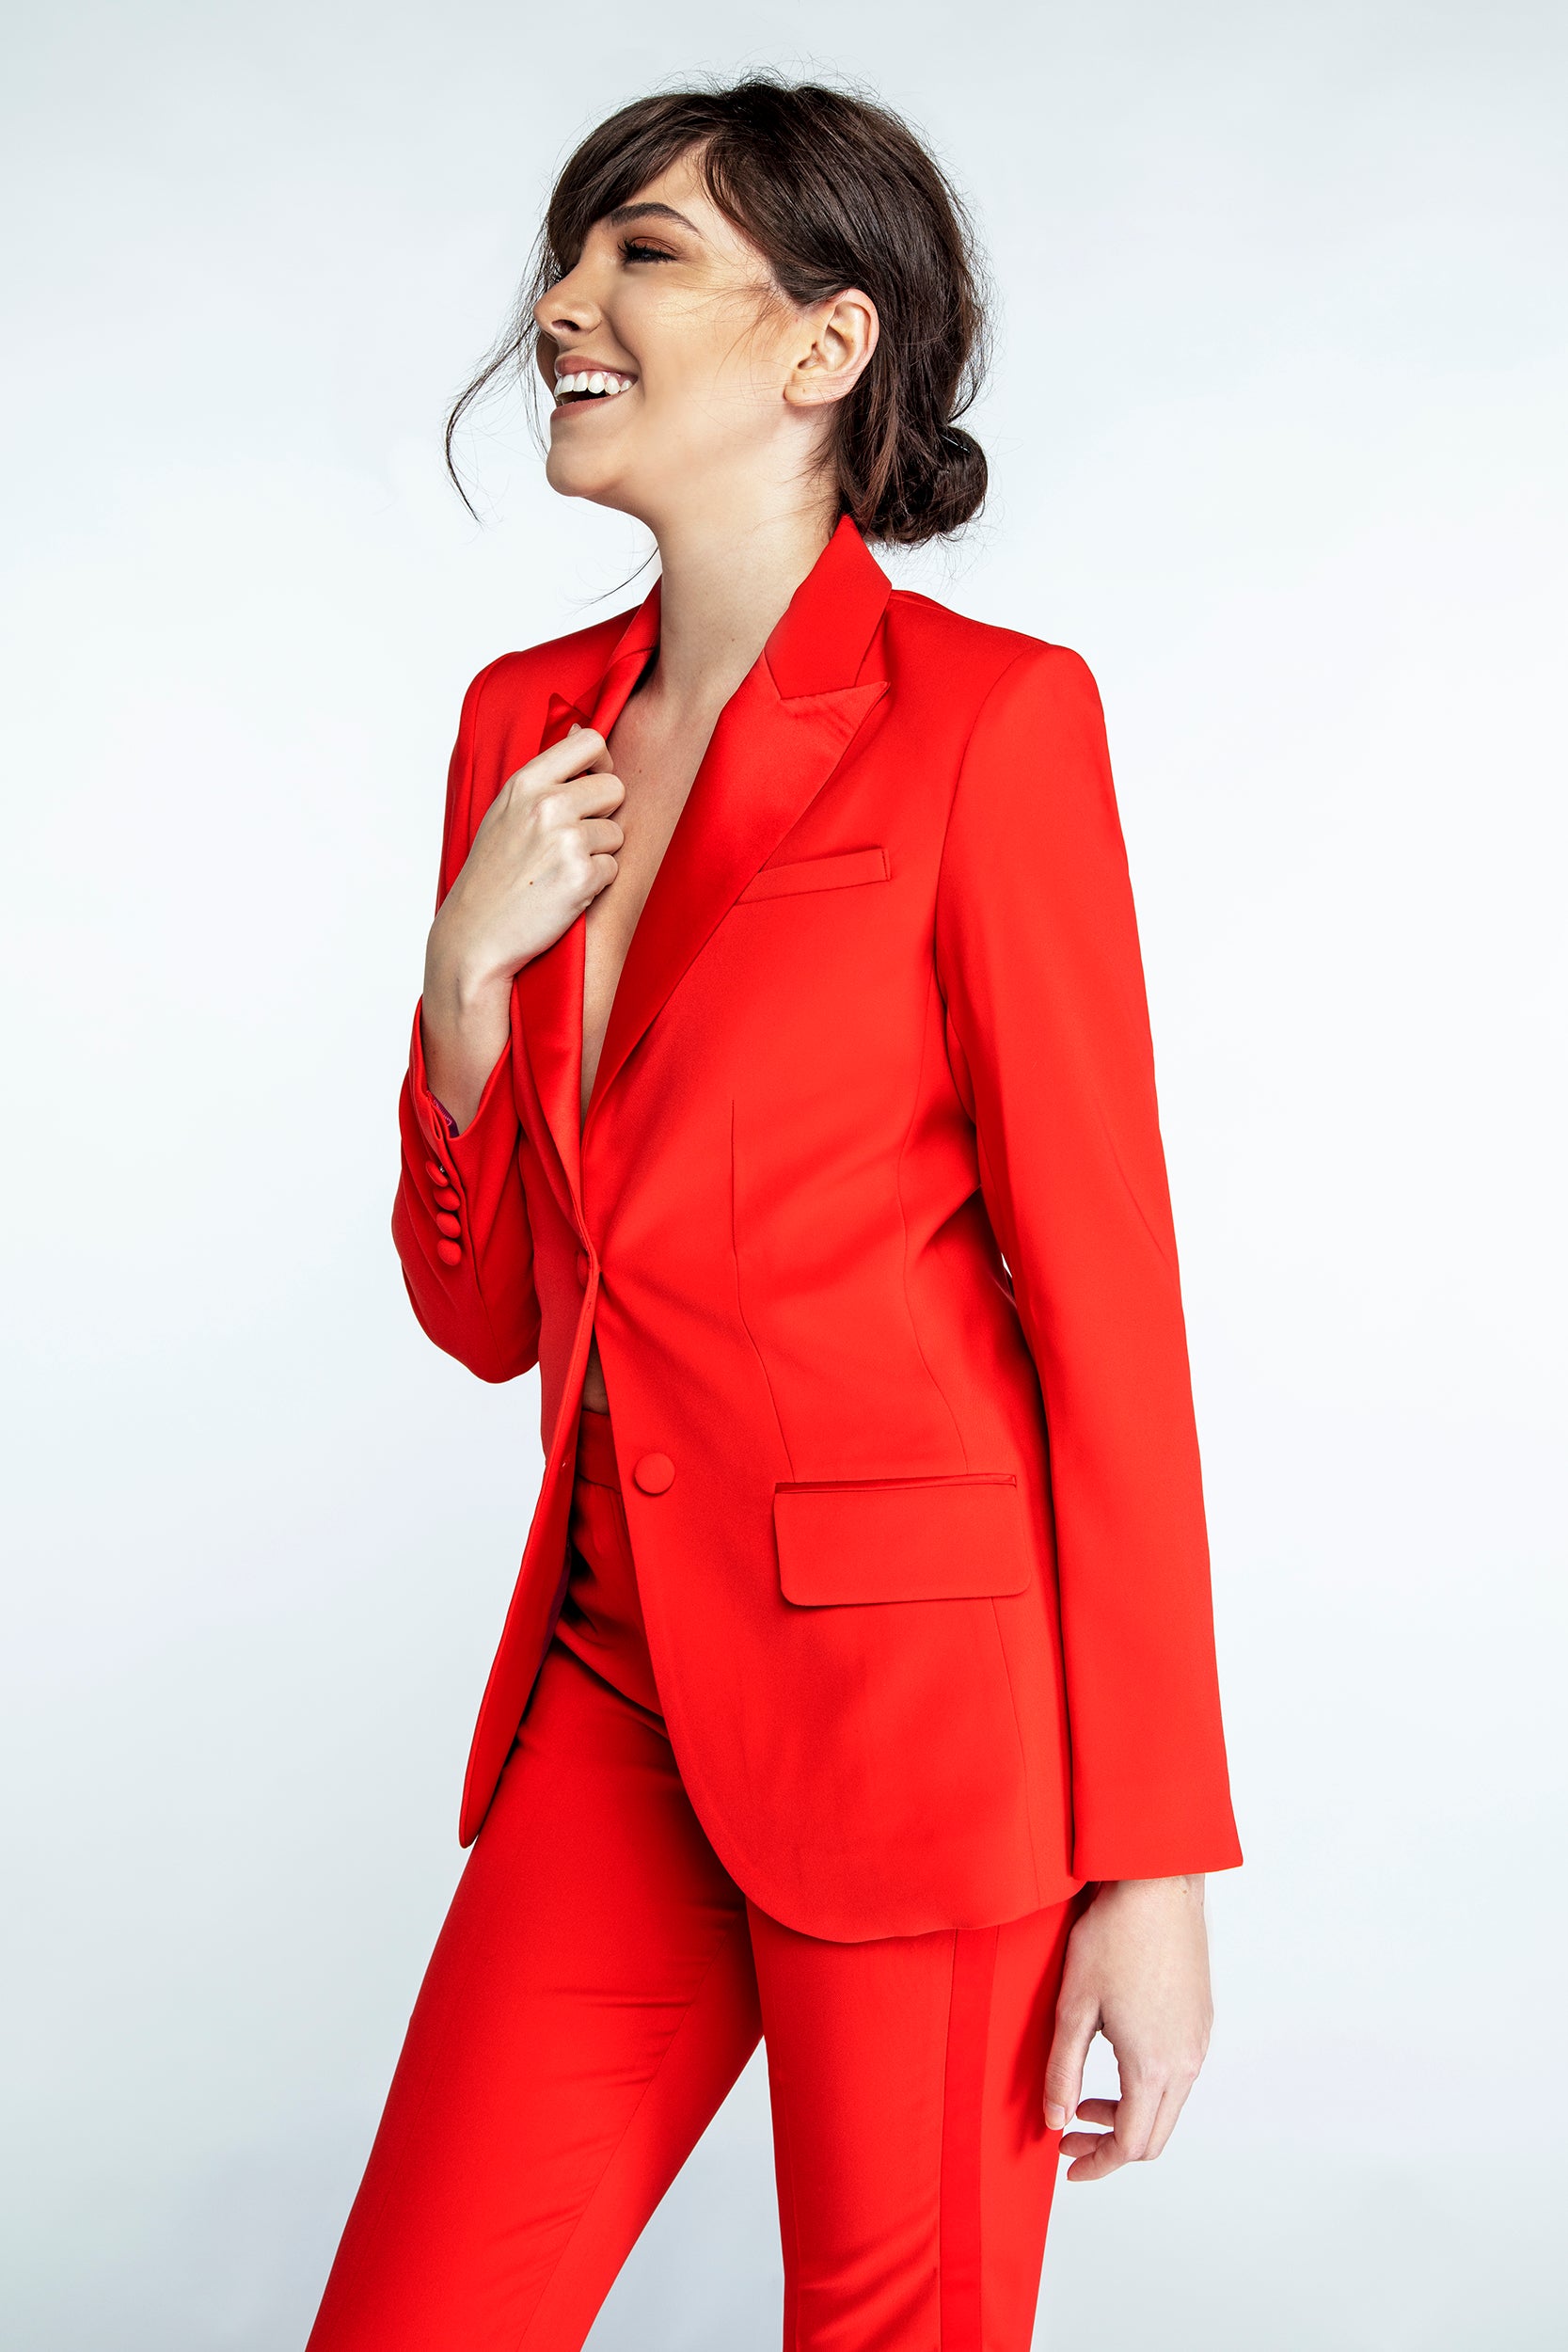 ASOS DESIGN skinny tuxedo jacket in red with black lapel | ASOS